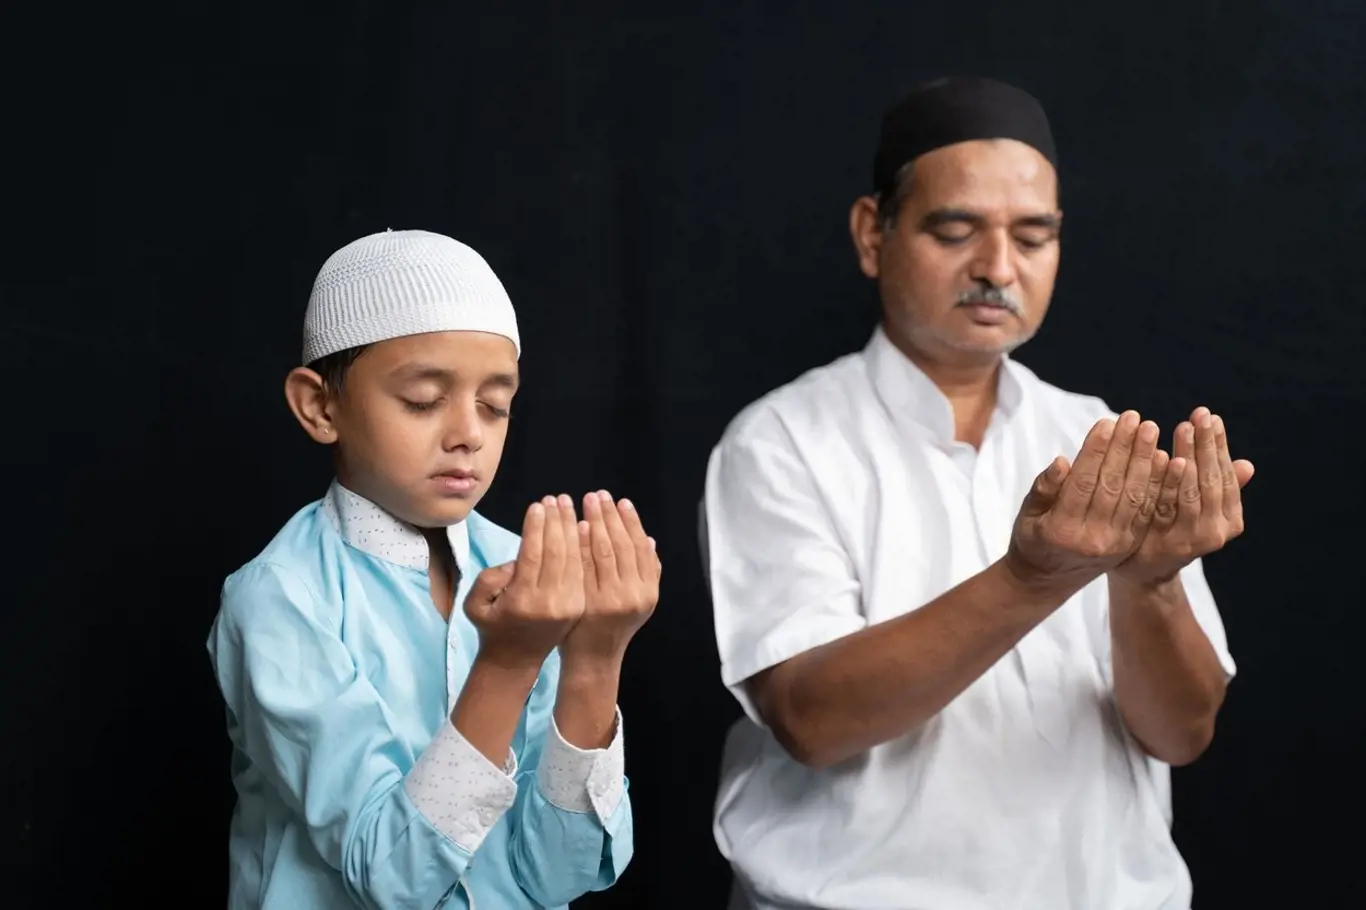 Otec a syn při modlitbě.